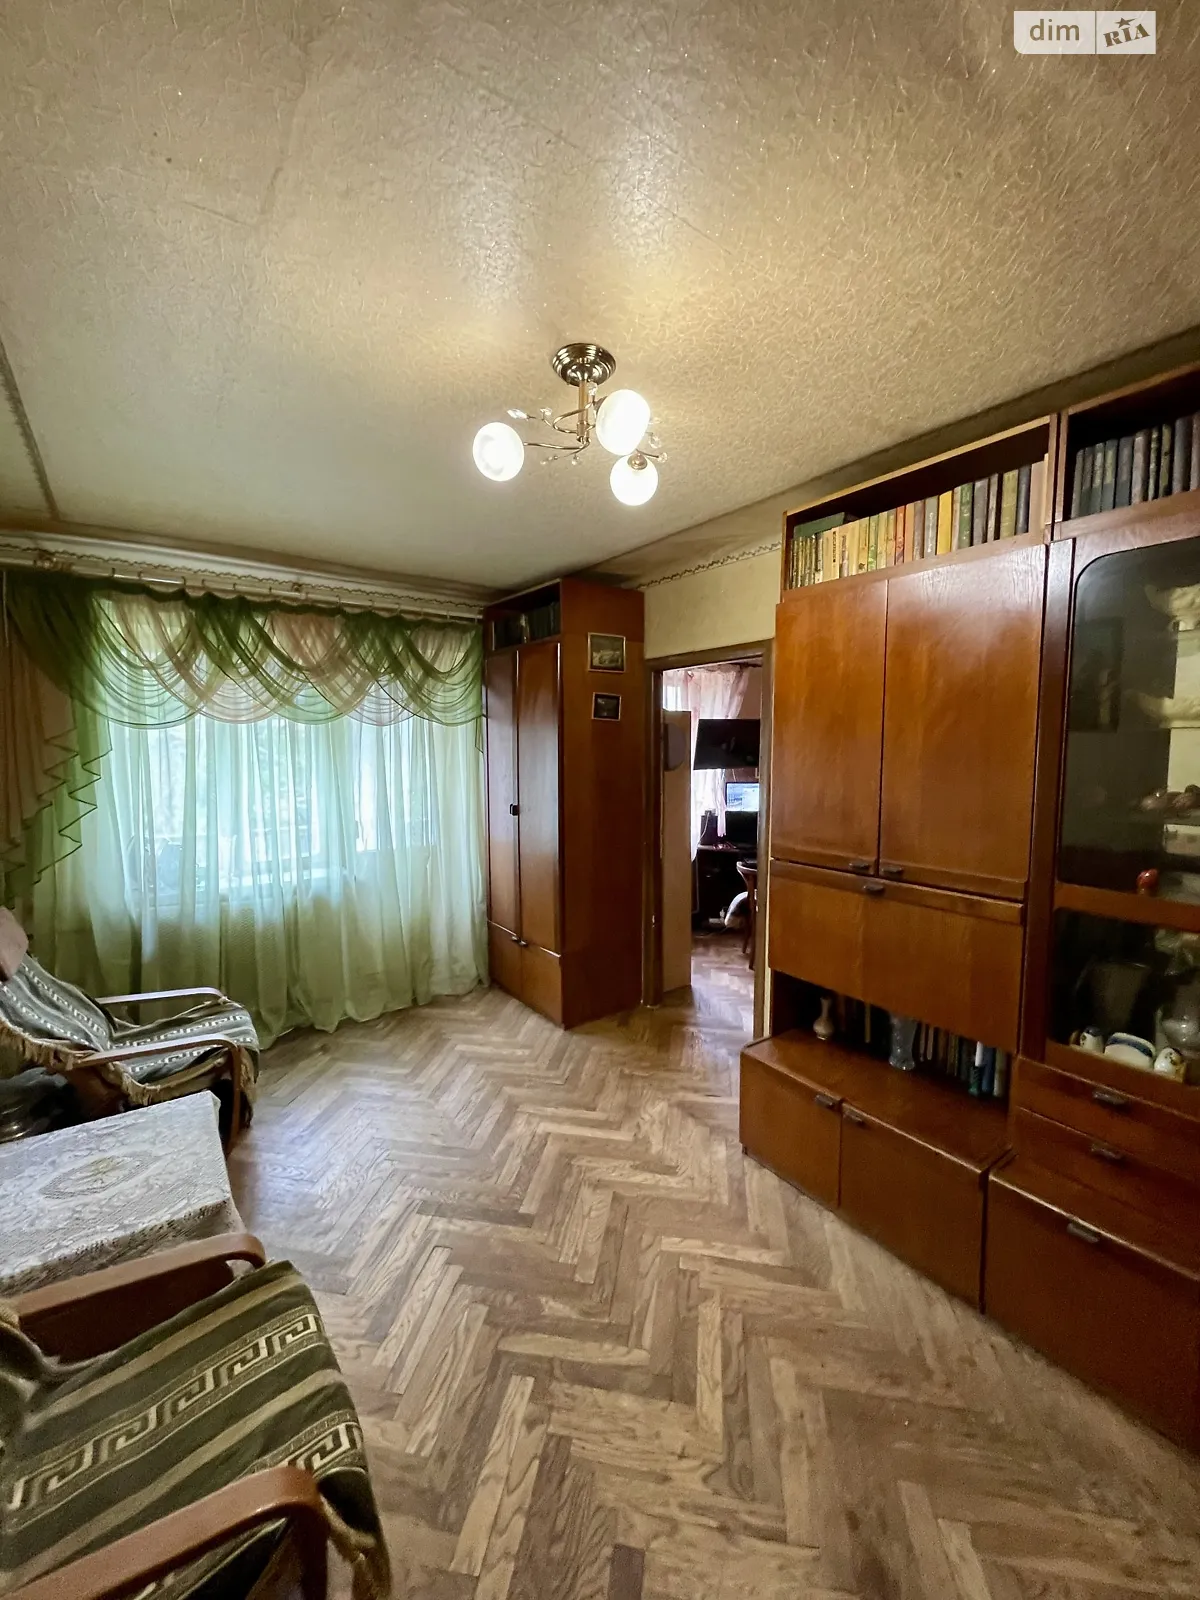 2-кімнатна квартира 41.5 кв. м у Луцьку, цена: 42000 $